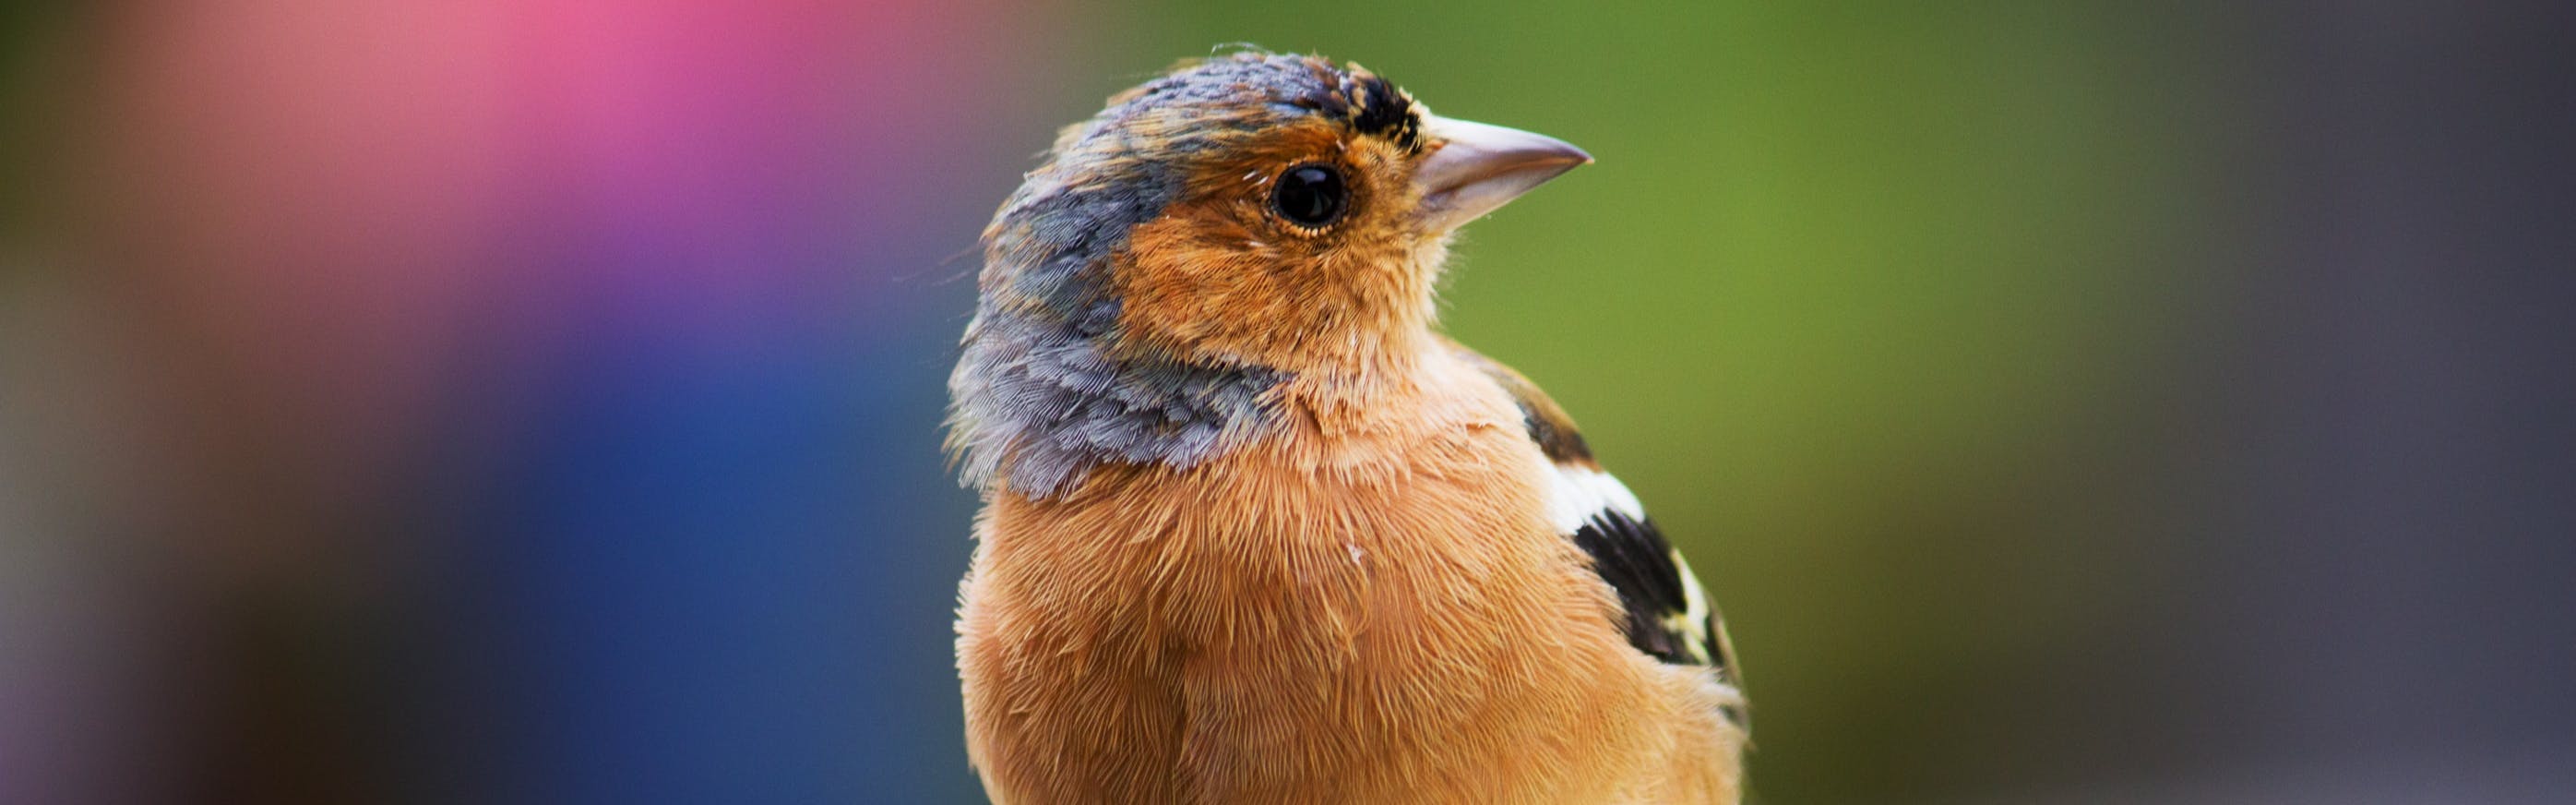 A closeup on a small grey and orange bird looking sideways